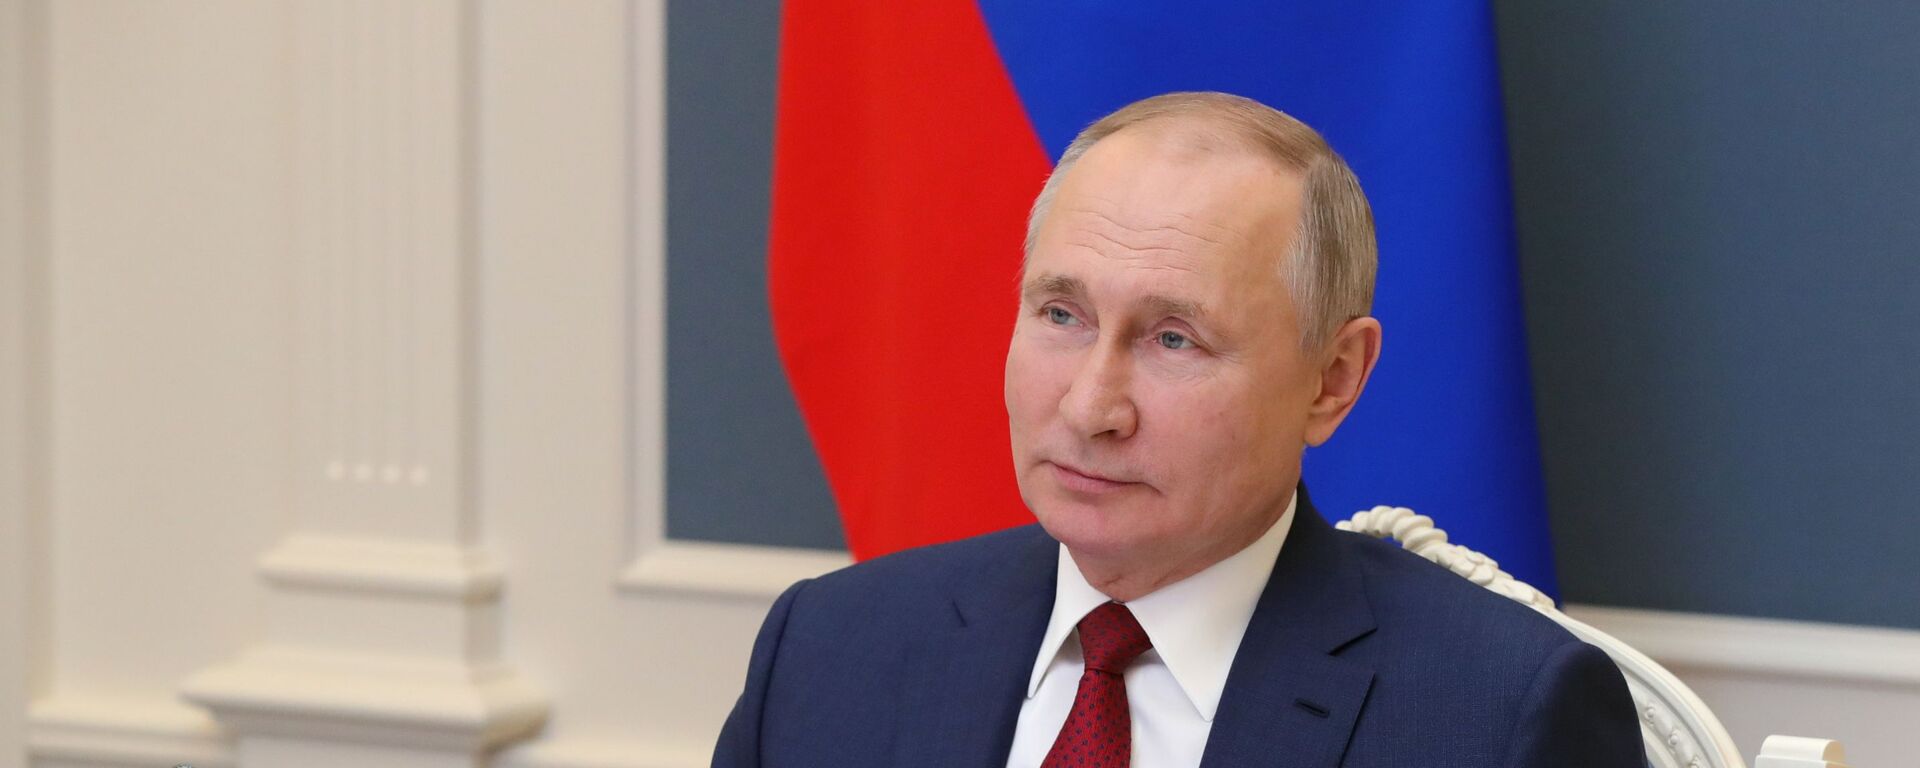 Президент РФ В. Путин выступил на сессии онлайн-форума Давосская повестка дня 2021 - Sputnik Молдова, 1920, 23.04.2021